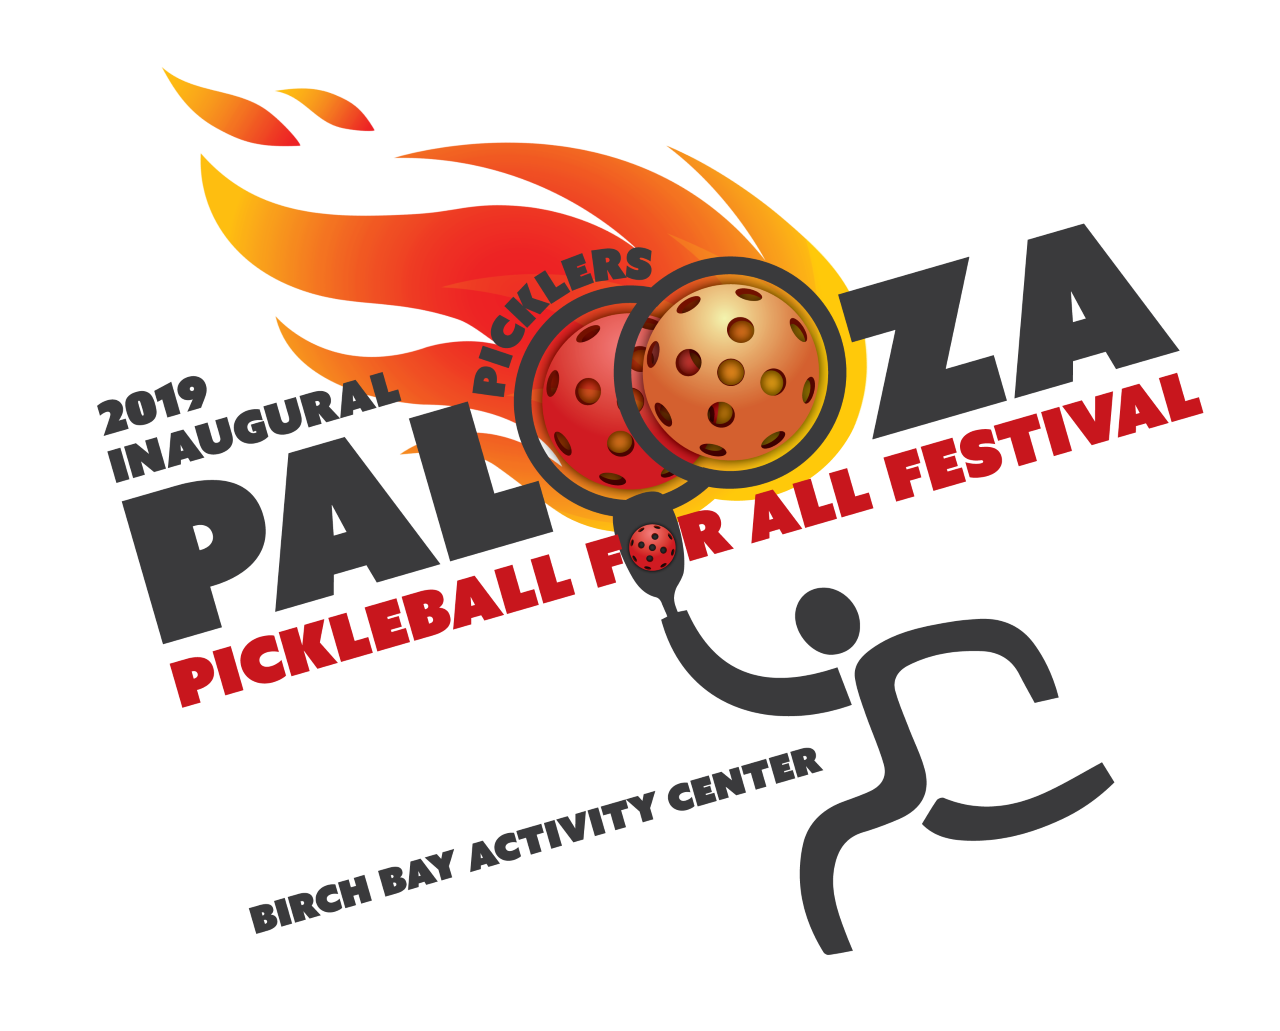 PicklersPalooza updated logo